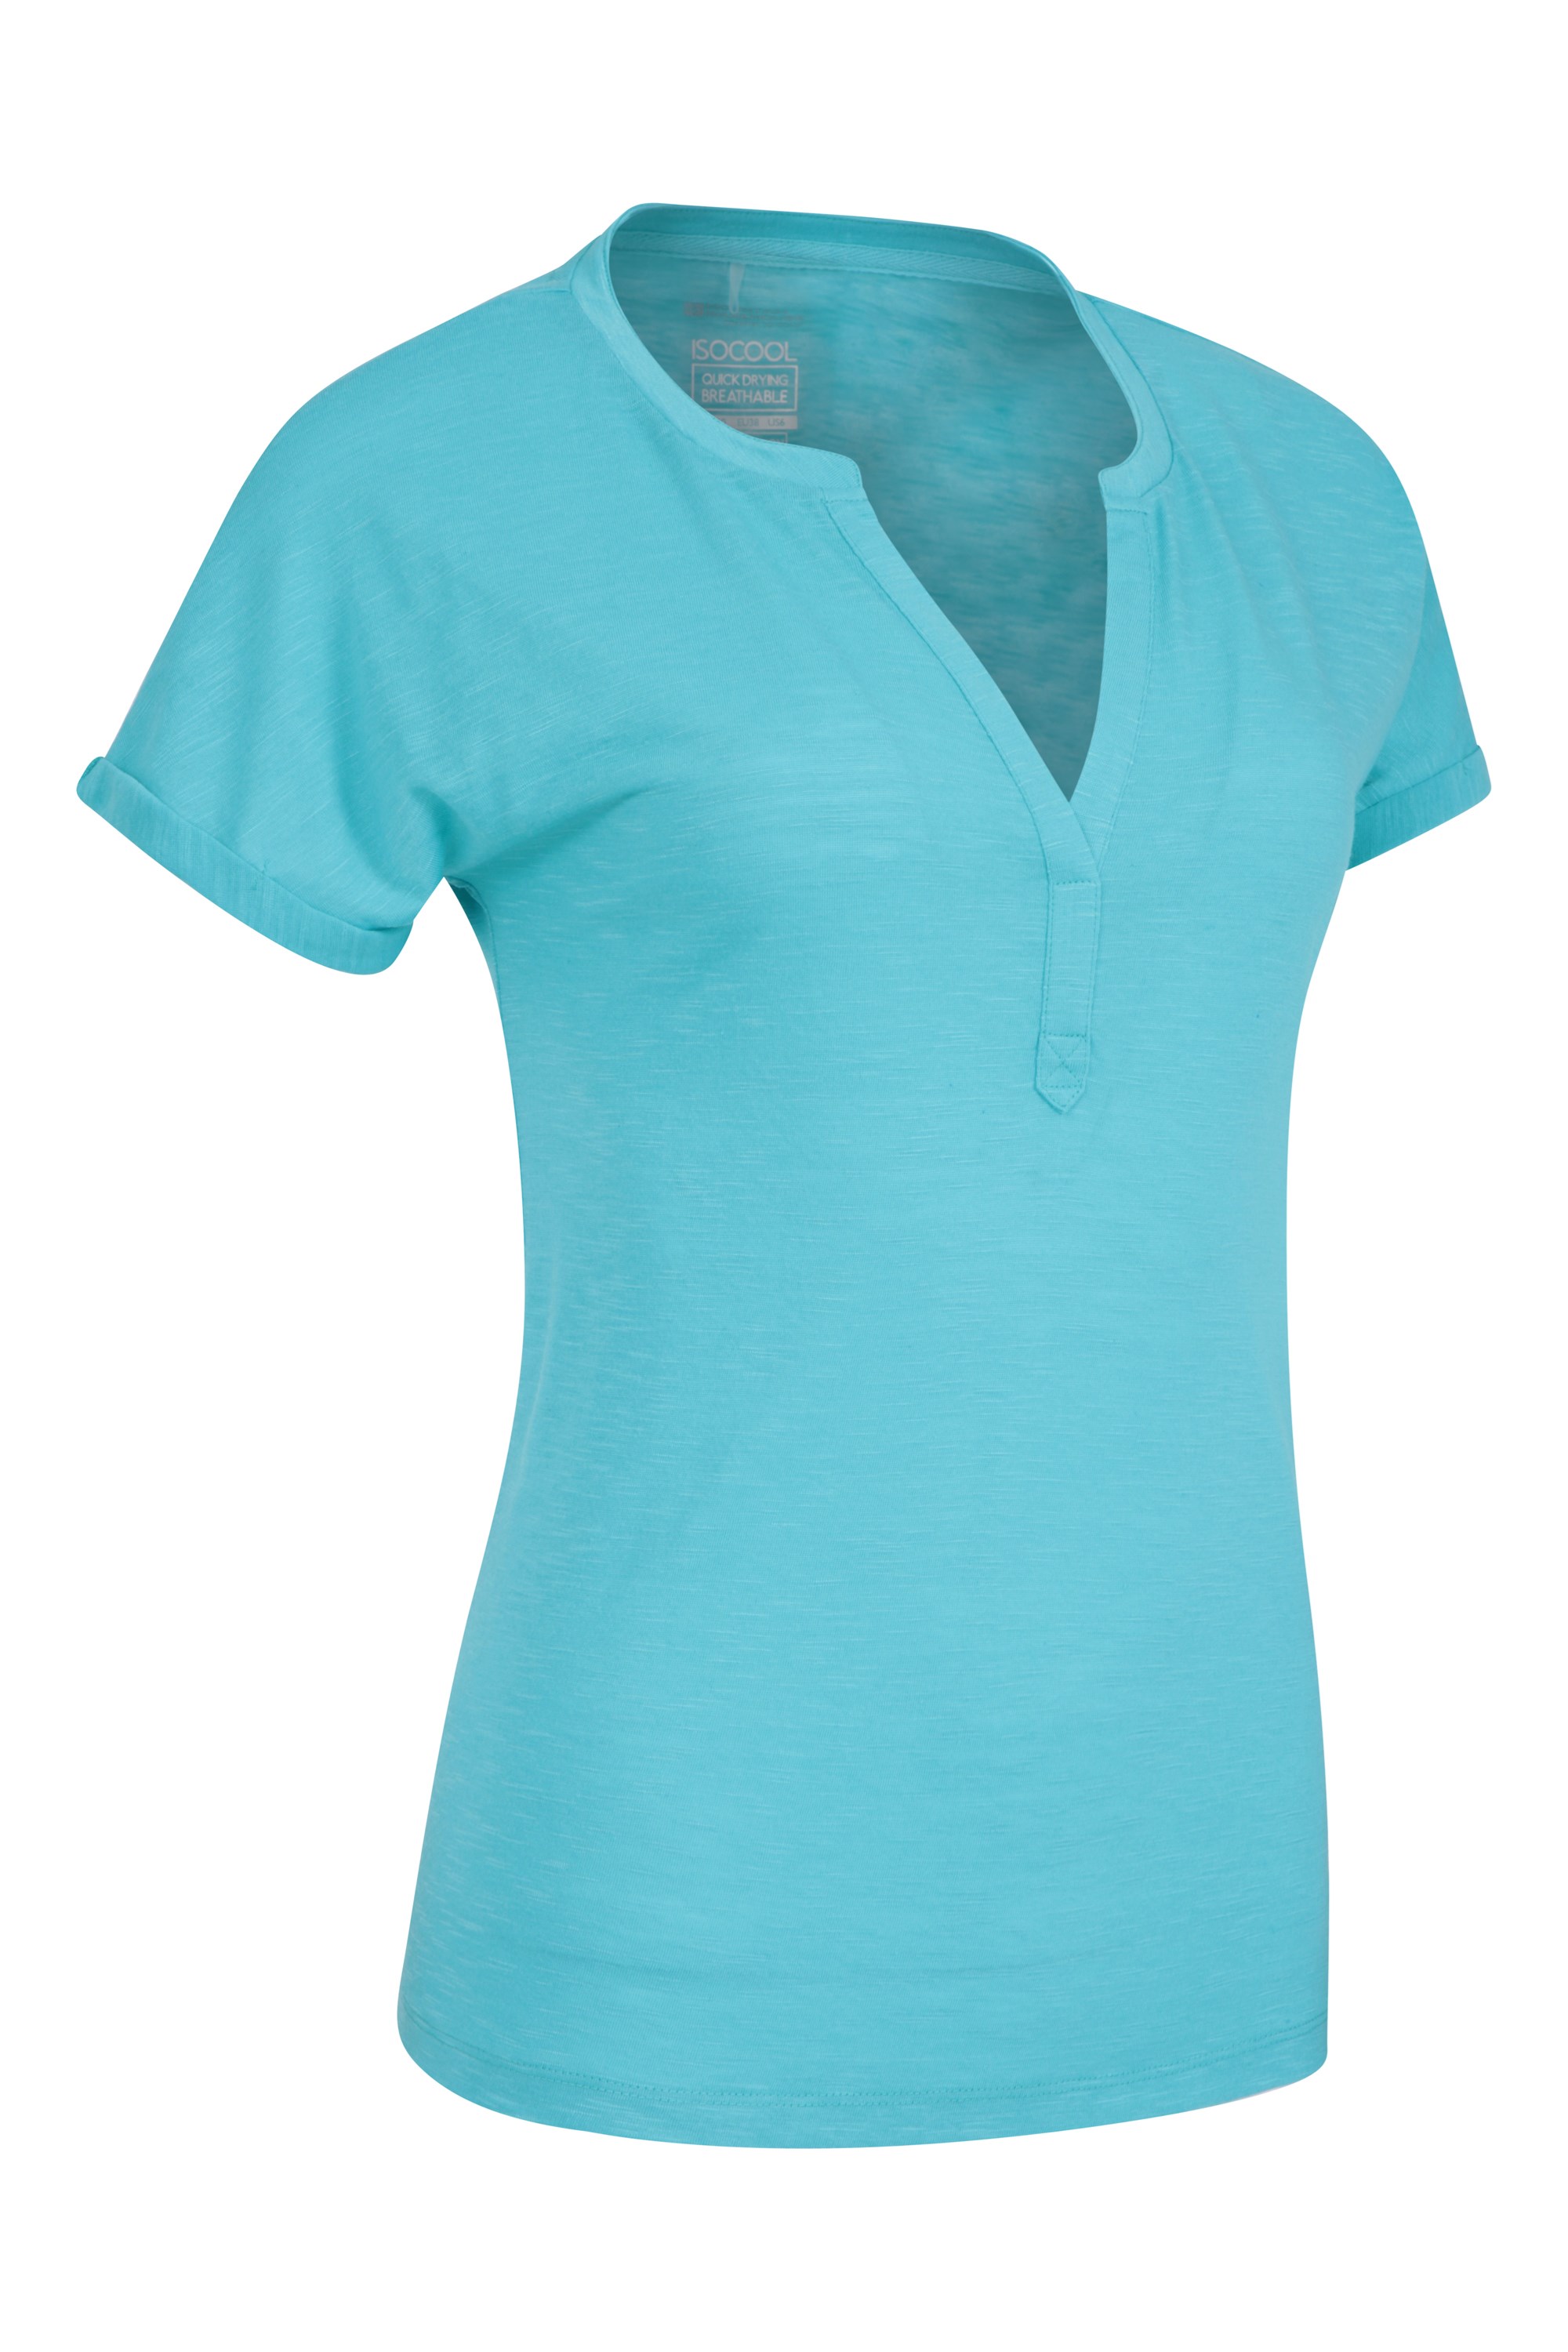 260GSM Unisex Snow Wash T-shirt-T-shirts-Women's  clothing-PODpartner:Print-on-Demand Dropshipping